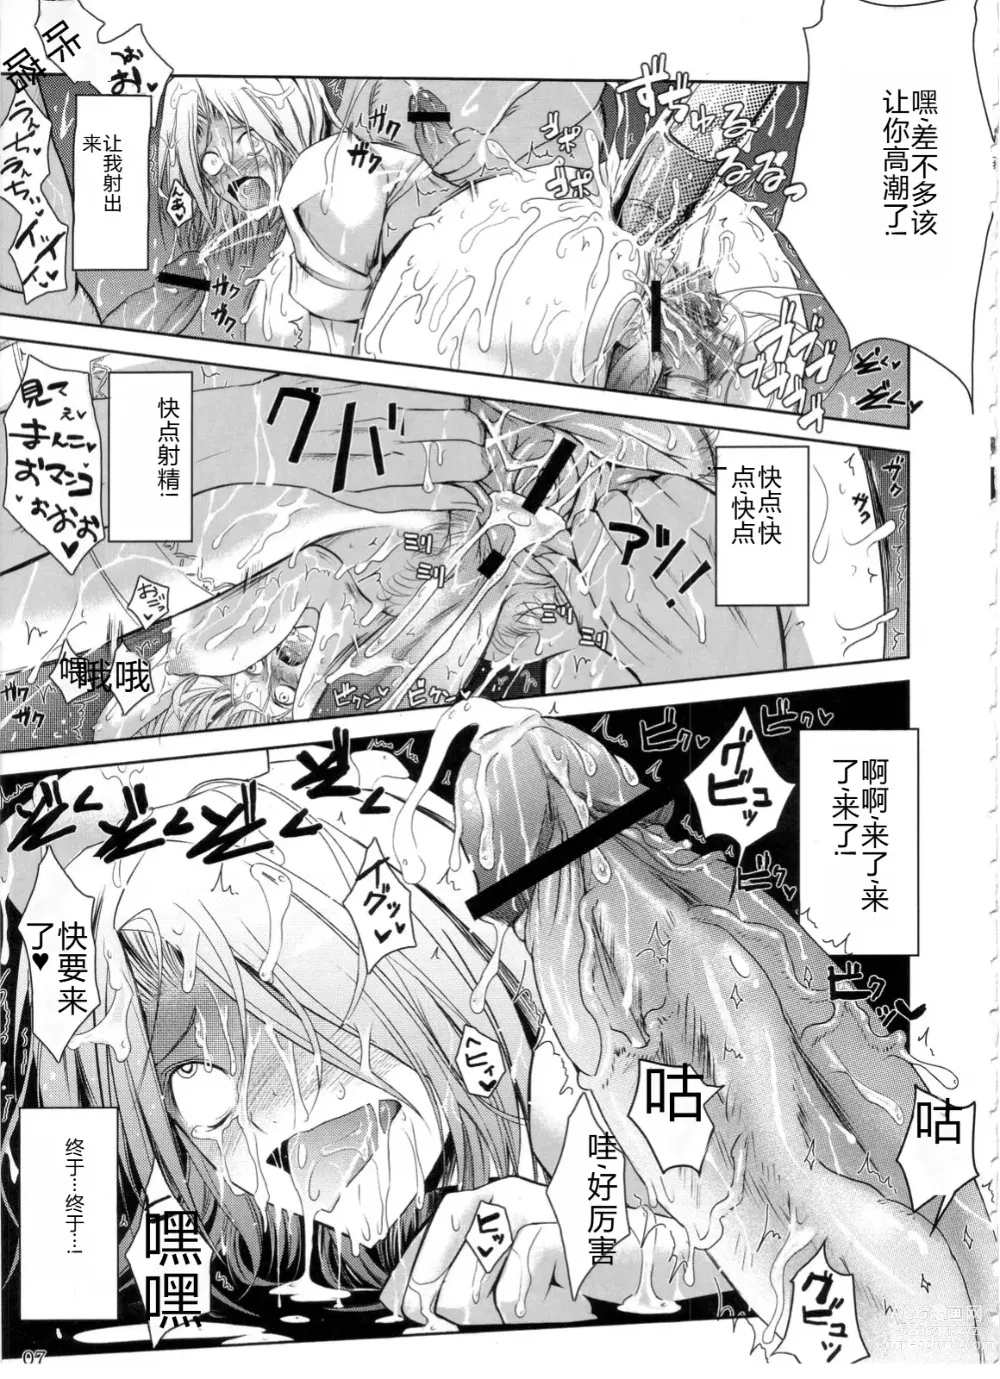 Page 6 of doujinshi Otome Byoutou